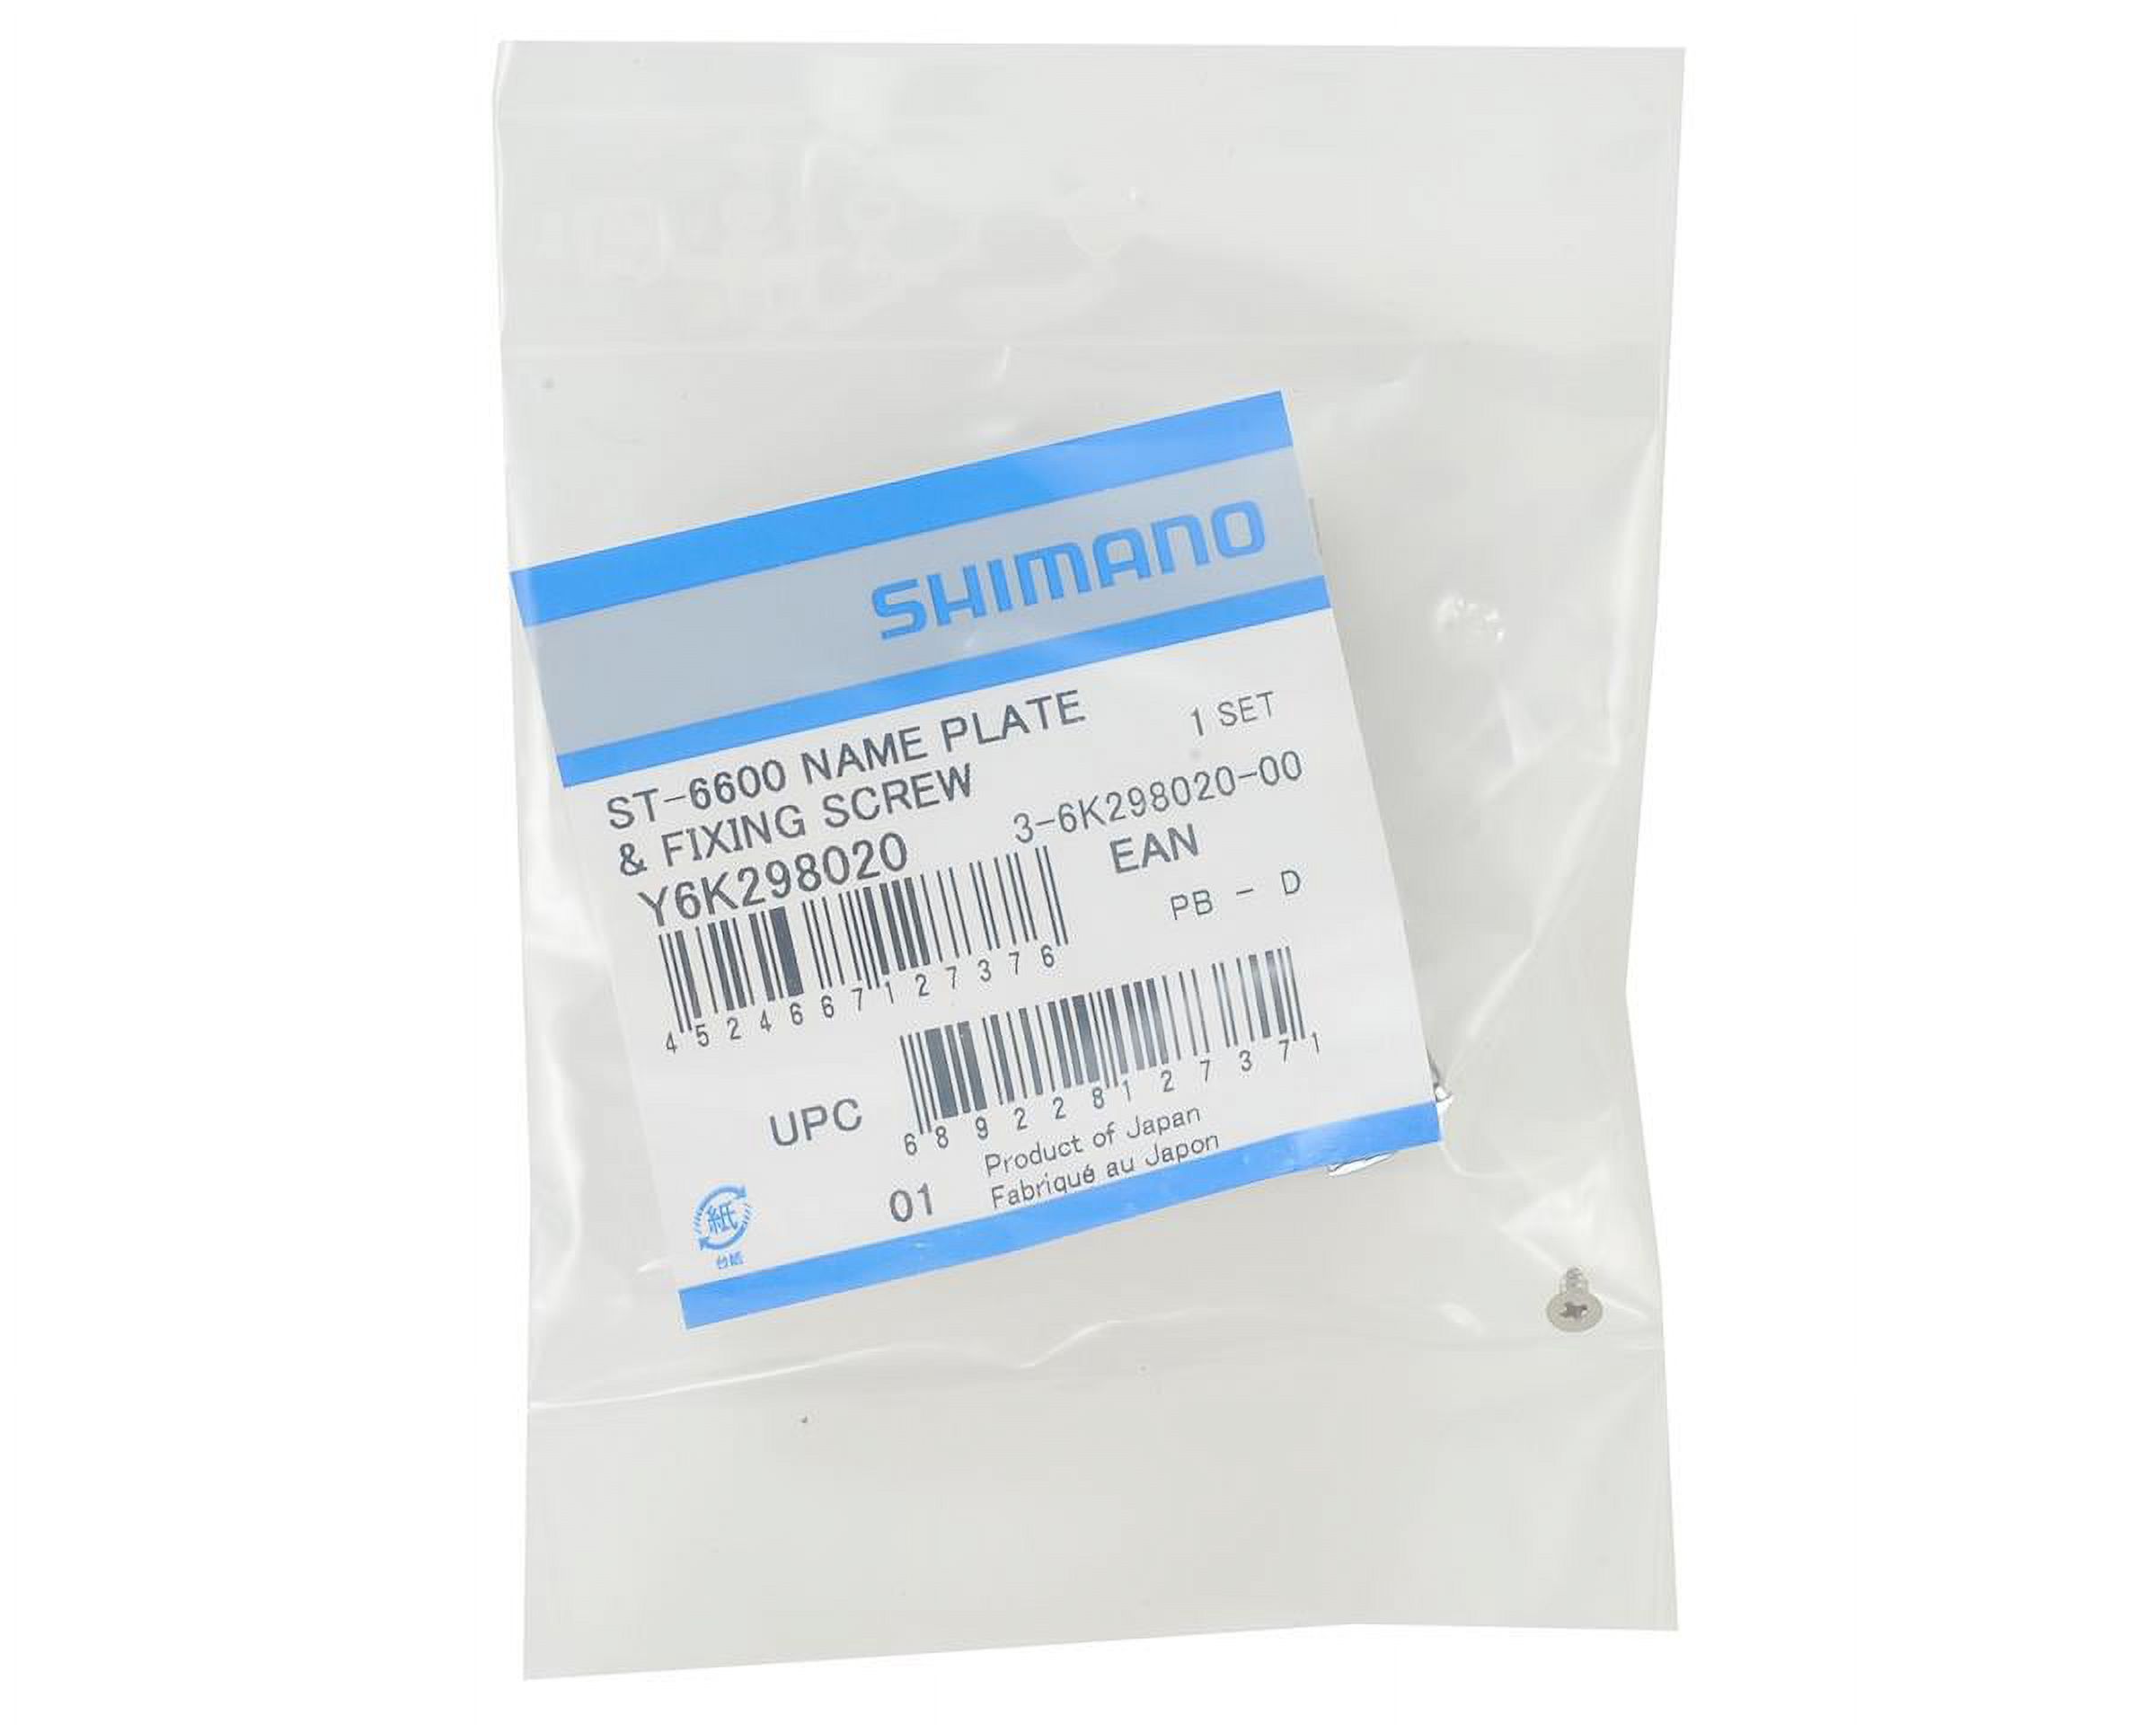 Shimano Ultegra ST-6600 ST-6603 STI Lever Name Plate & Screw - image 2 of 2